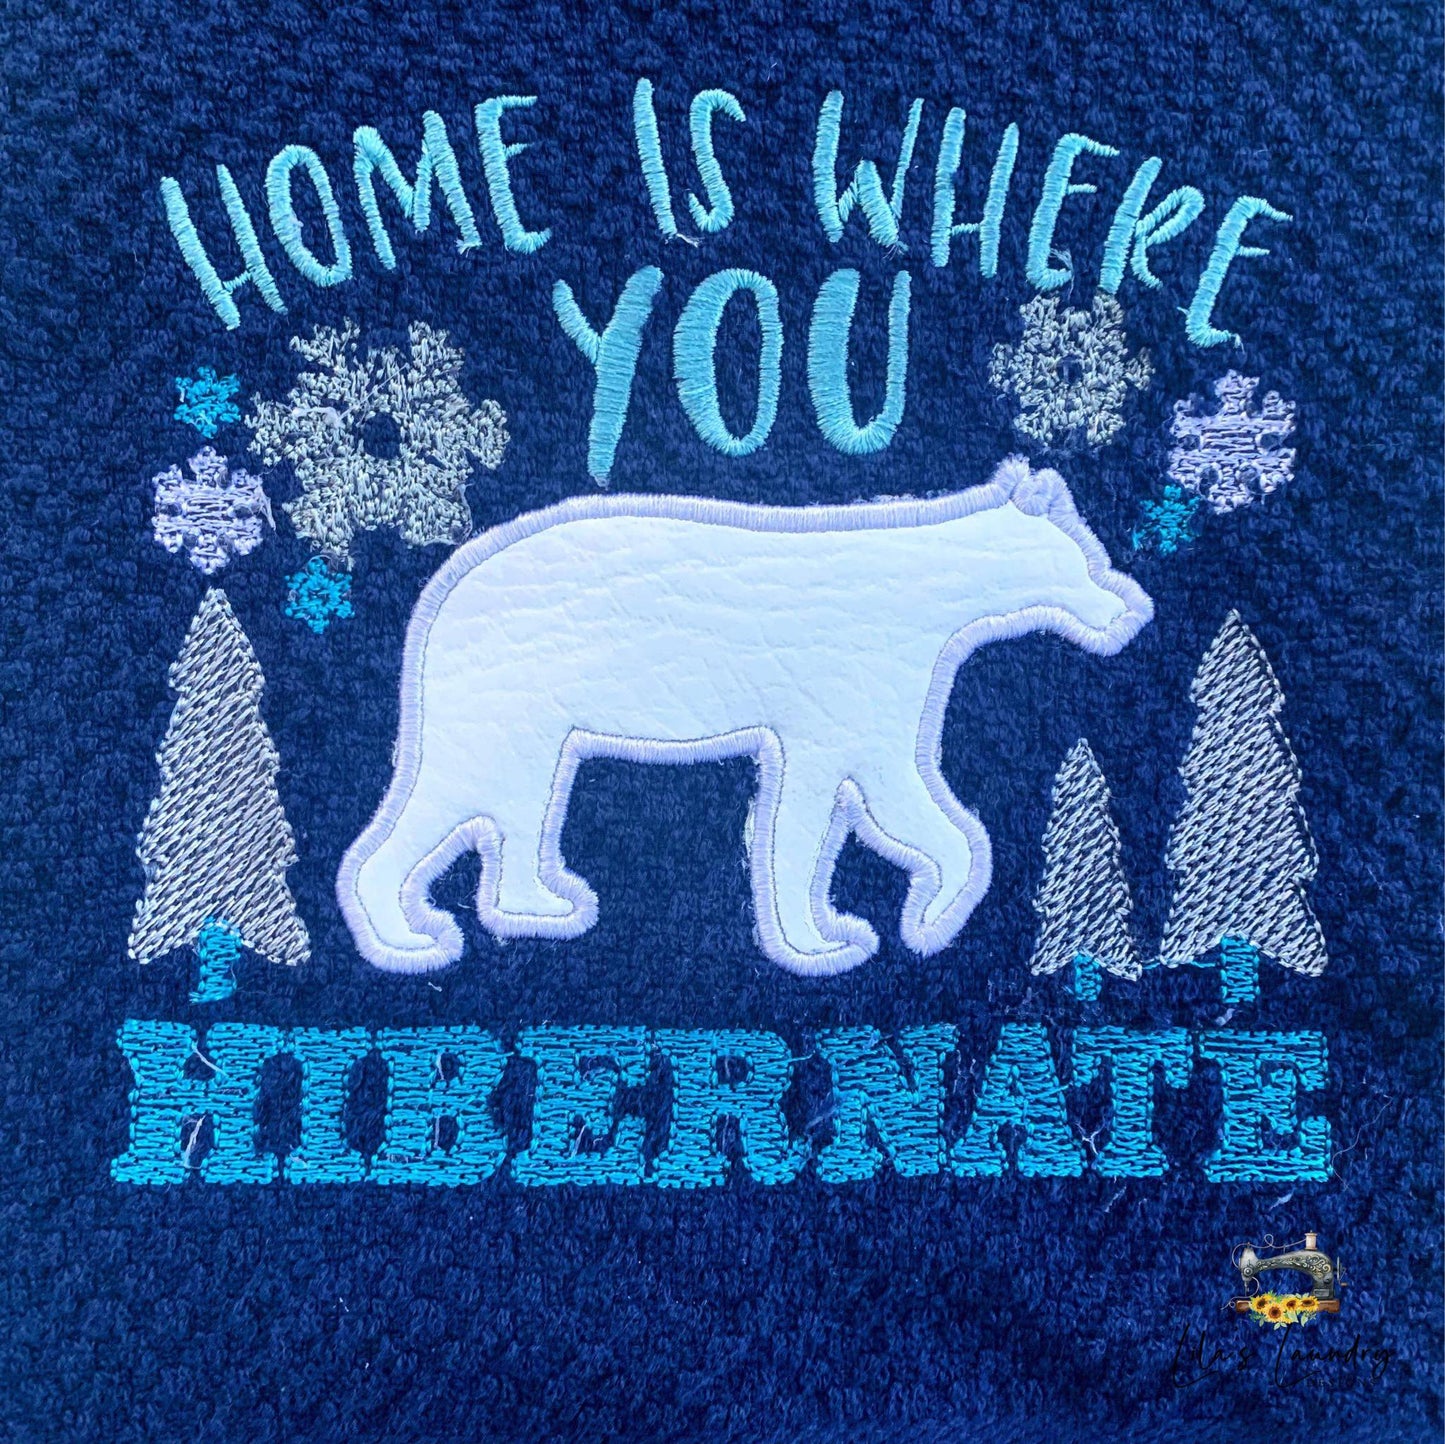 Home is Where You Hibernate - 3 sizes- Digital Embroidery Design